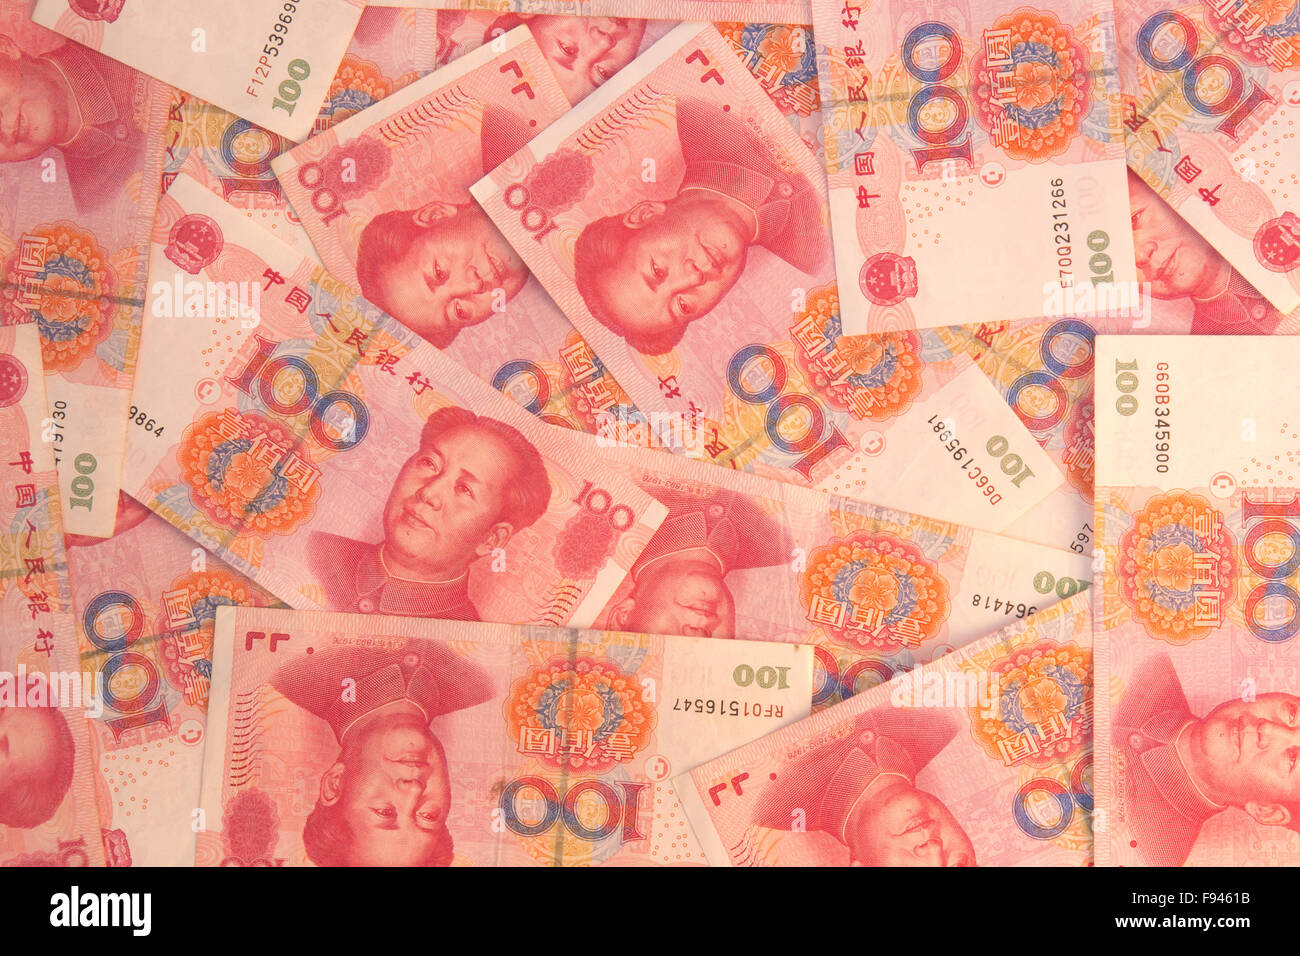 Chinese money background with 100 RMB bills Stock Photo